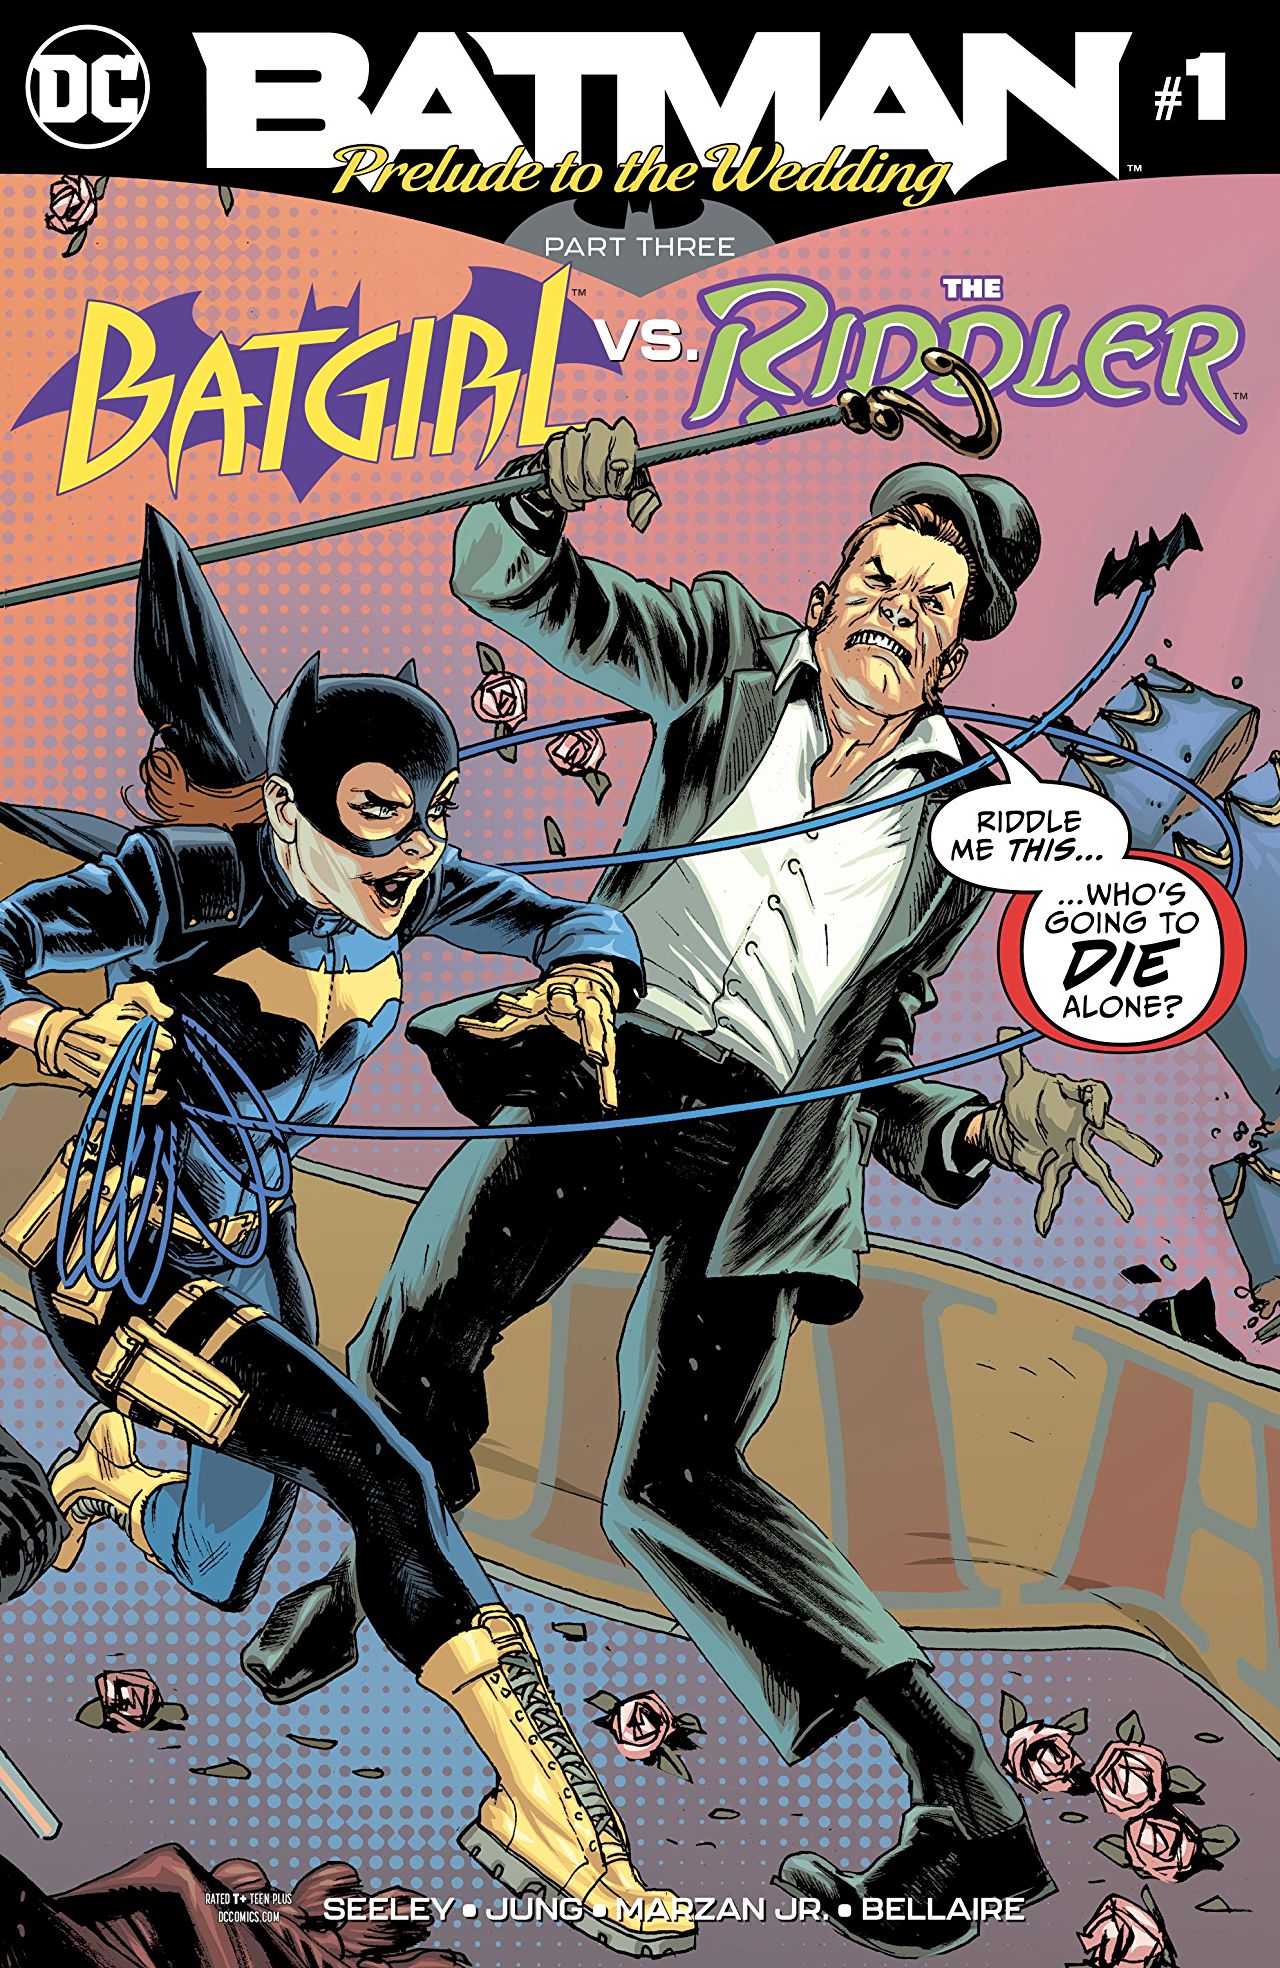 Batman: Prelude to the Wedding: Batgirl vs. the Riddler #1 review: Forever alone